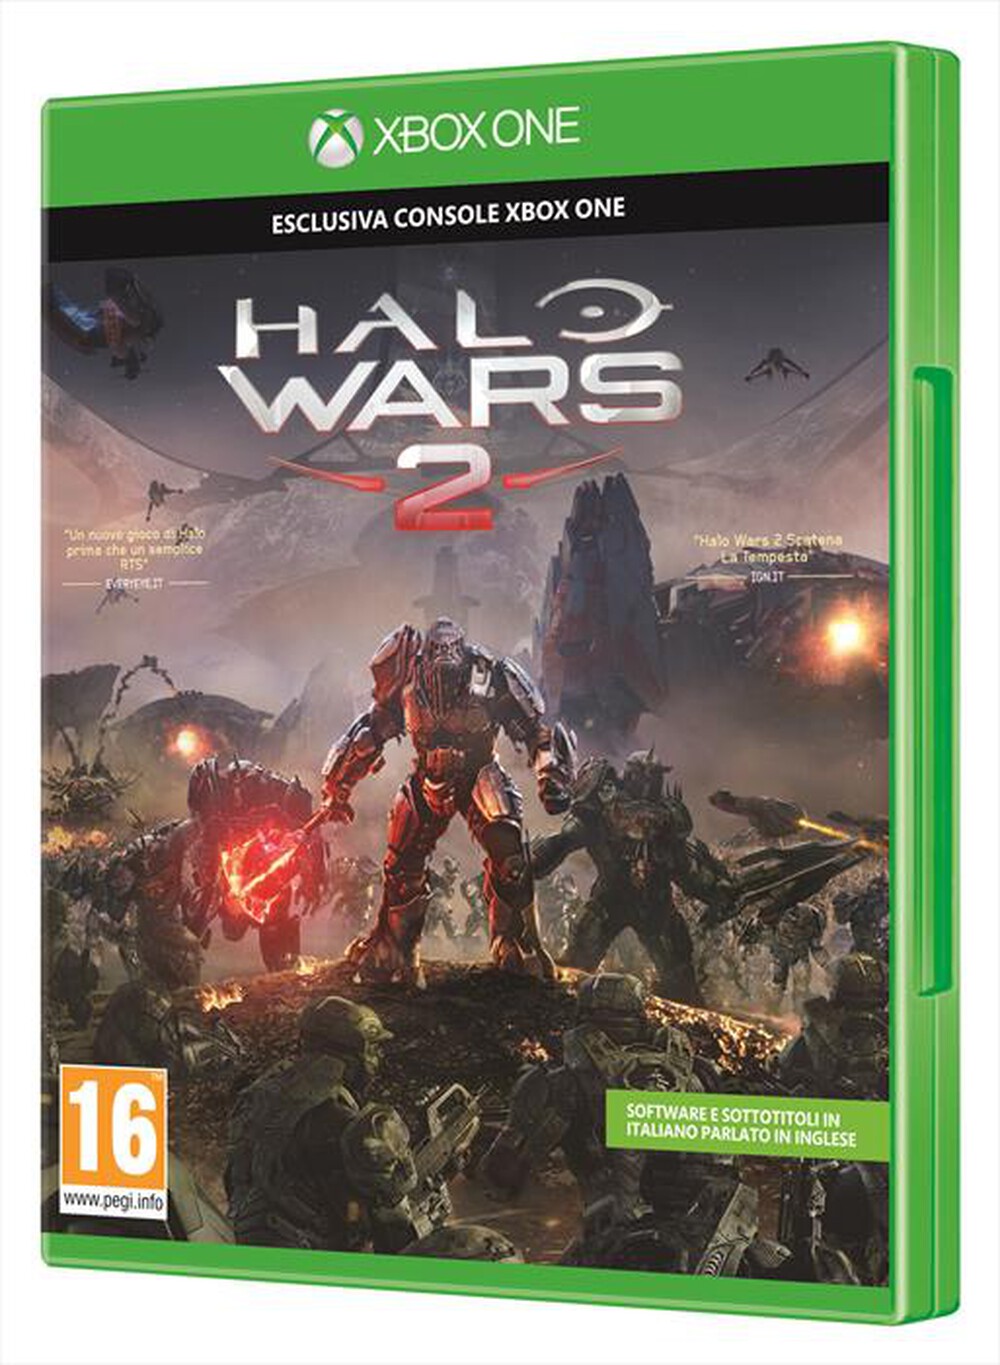 "MICROSOFT - Halo Wars 2 - Standard Edition Xbox One"